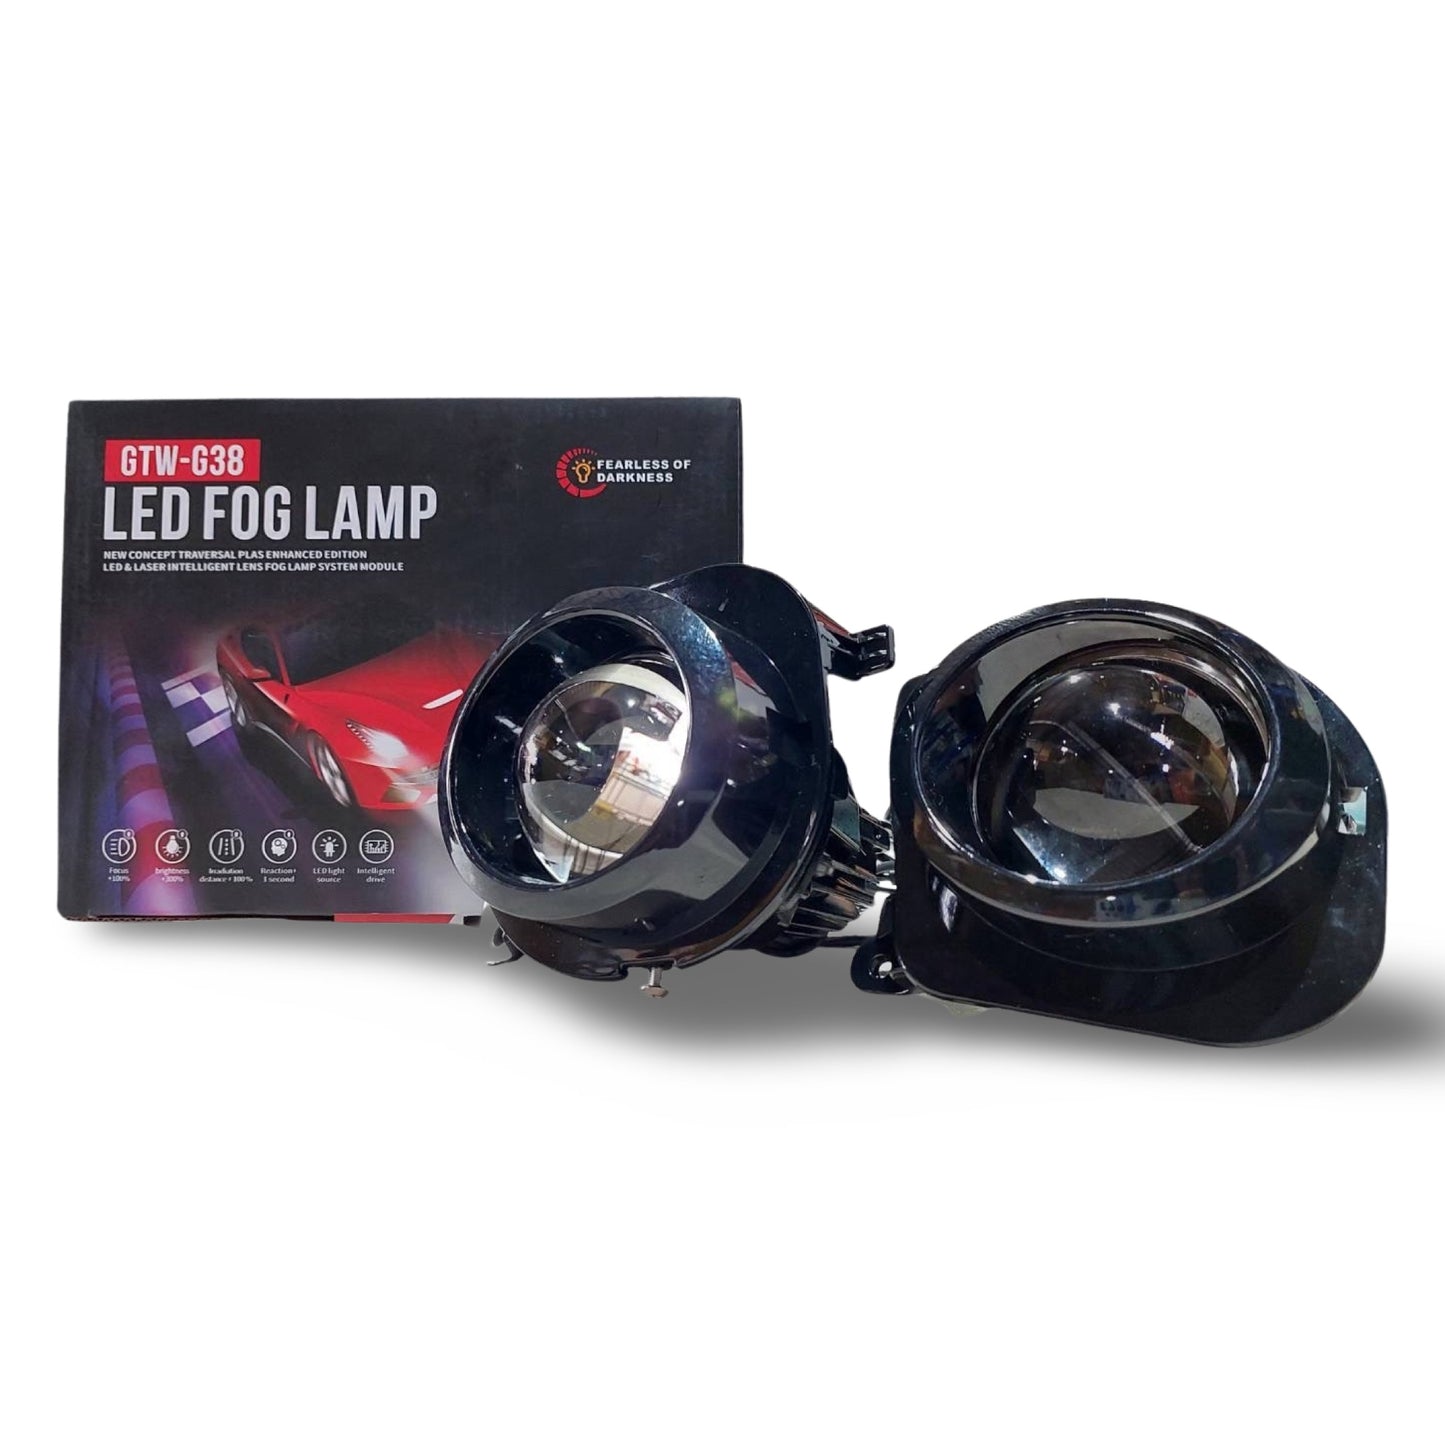 LED Projector Foglamp For BMW Series 5 X3, X4, X5, X6 6000K ไฟตัดหมอก LED Projector สำหรับ  BMW X3, X4, X5, X6